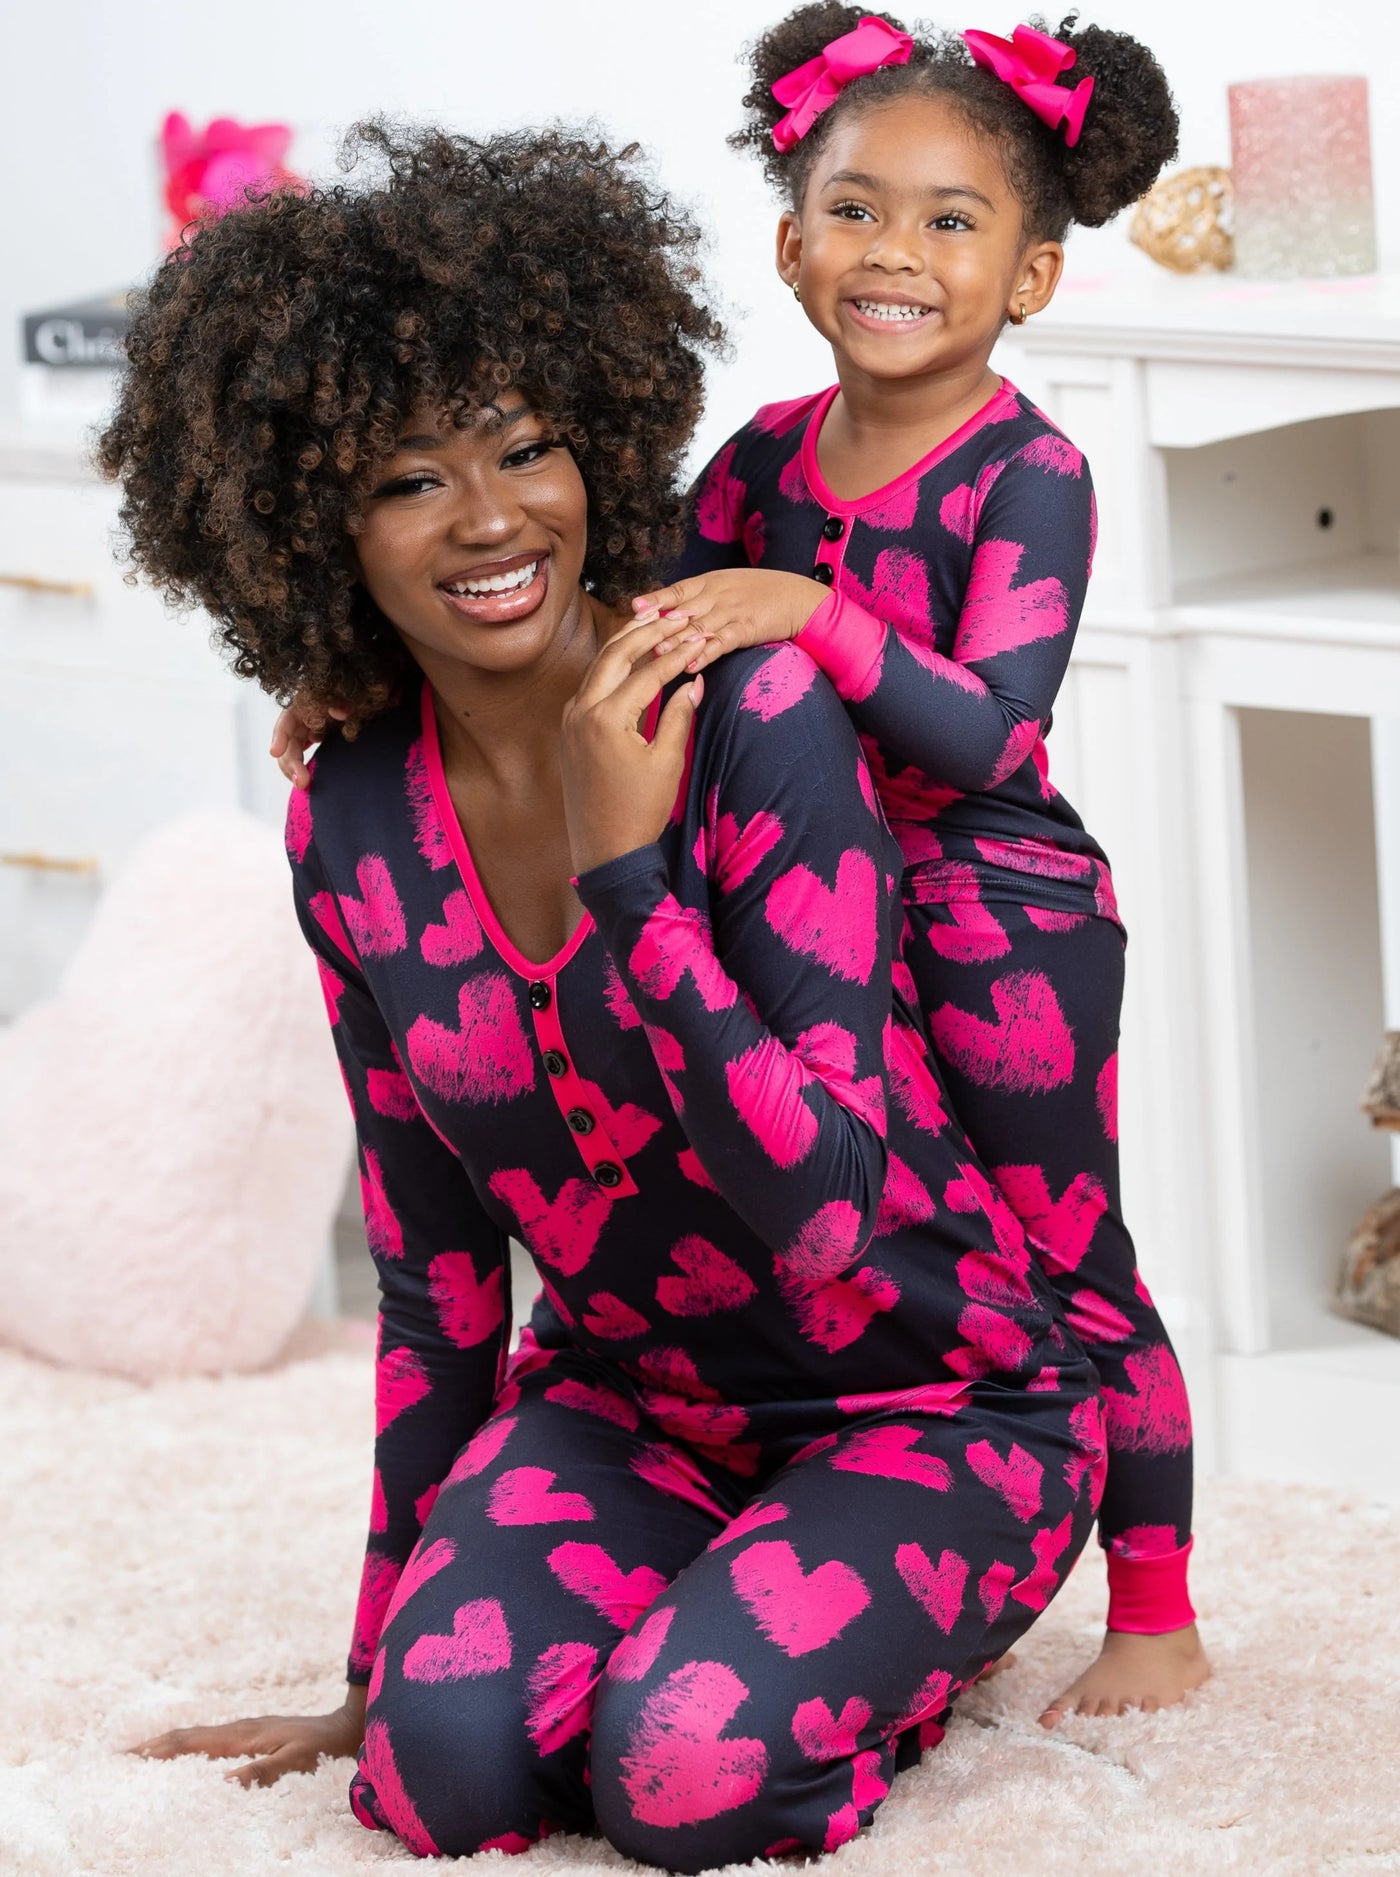 Mia Belle Girls Rust Checkered Silk Pajamas | Mommy and Me Pajamas Orange / 10Y/12Y